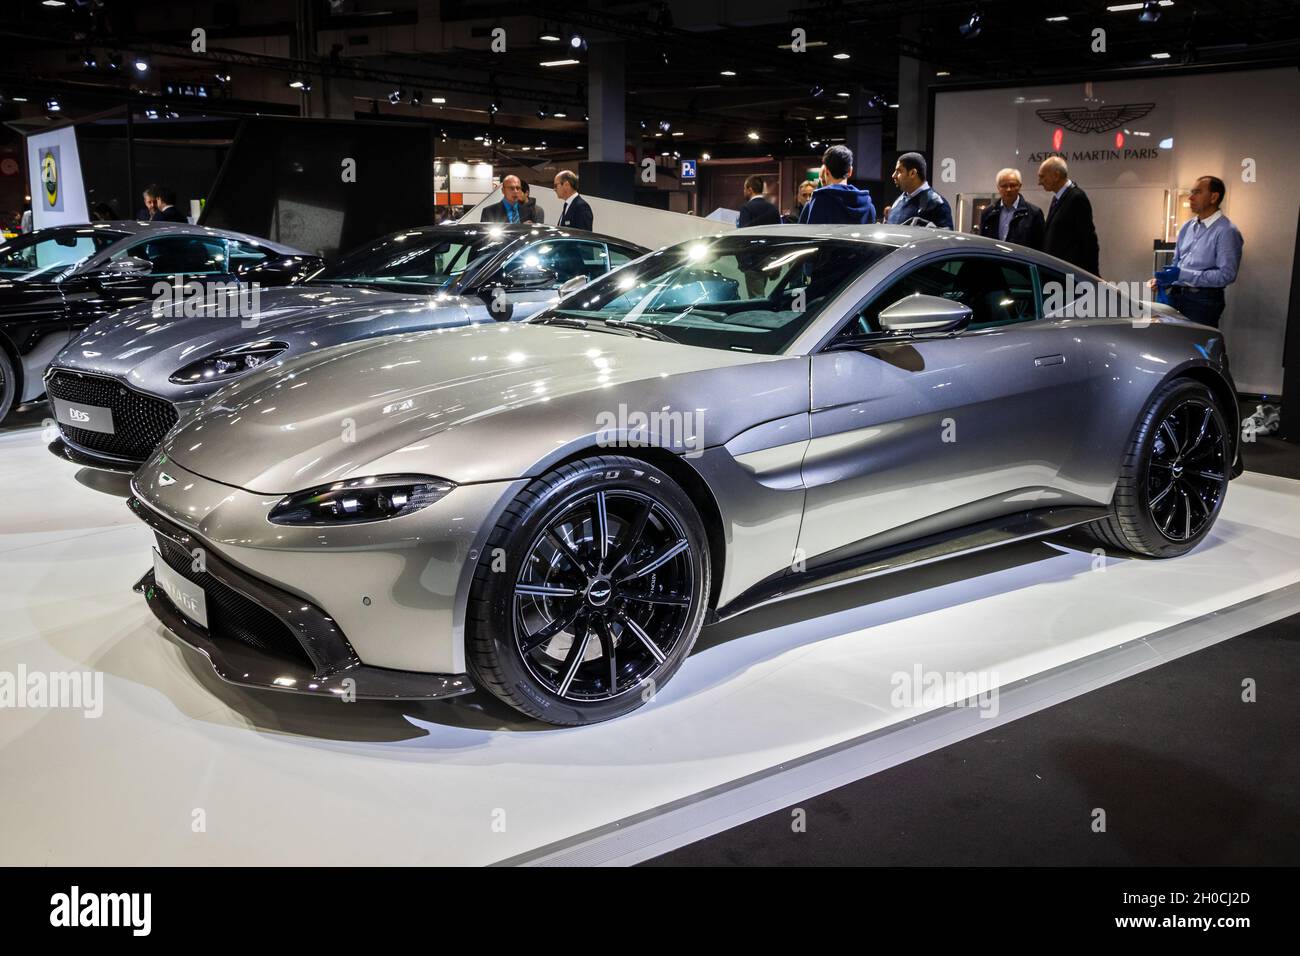 Aston Martin Vantage sports car showcased at the Paris Motor Show. Paris, France - October 2, 2018. Stock Photo